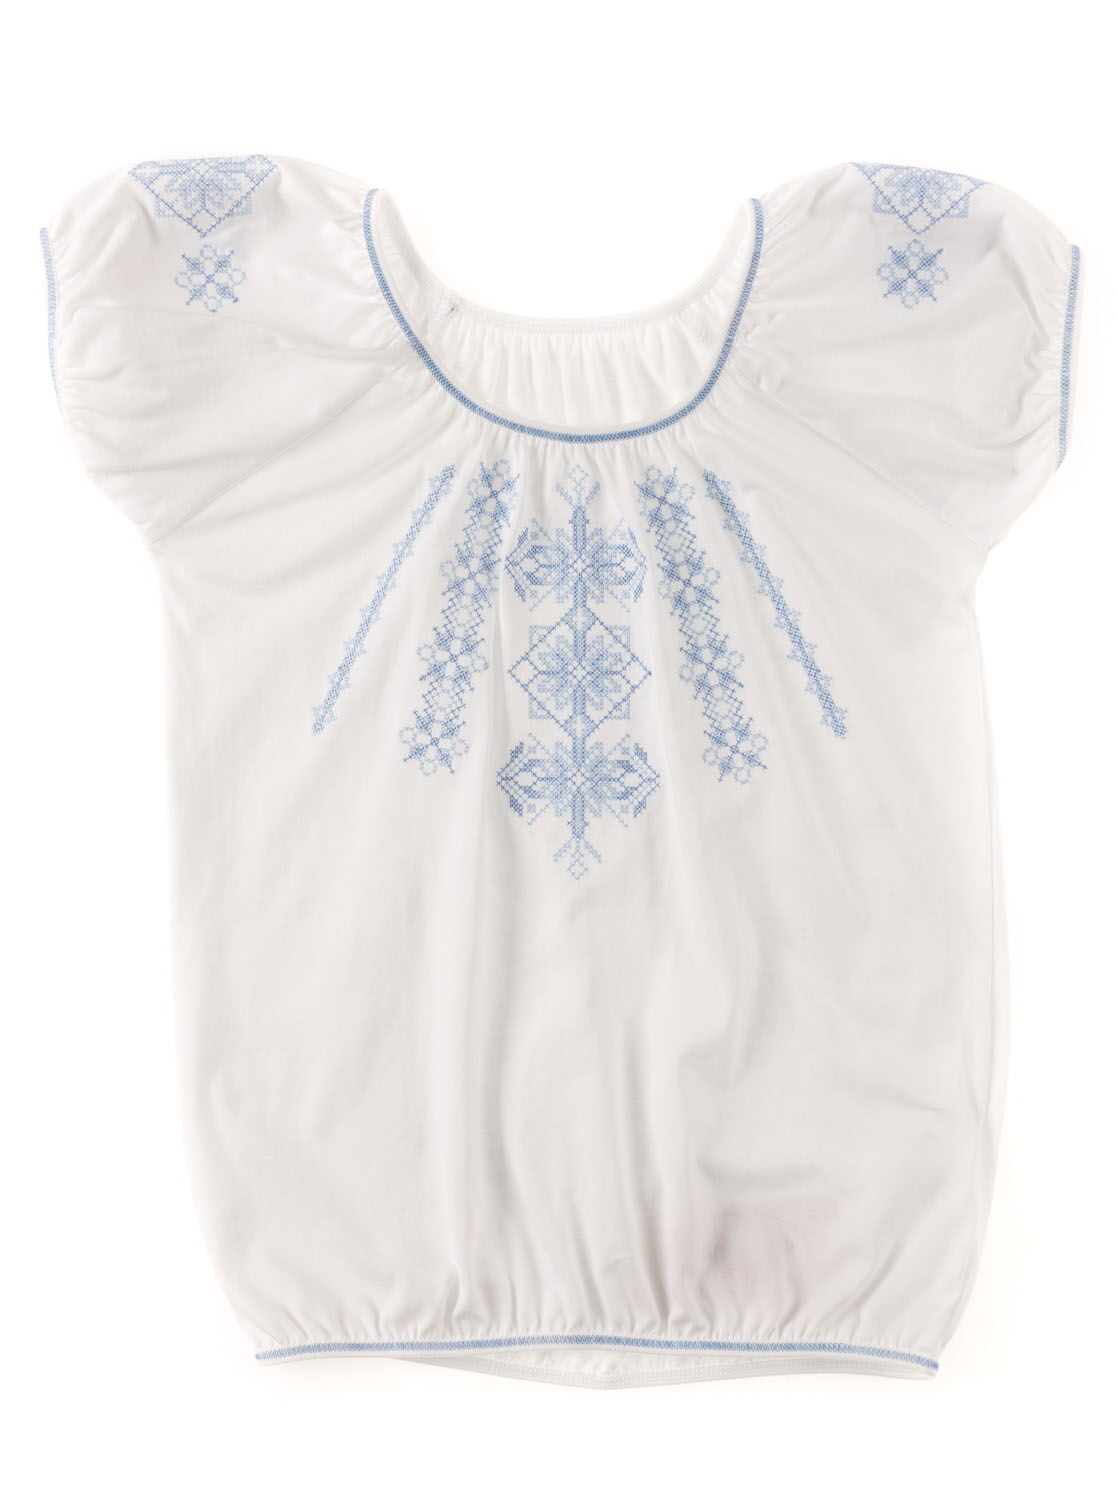 Блузка-вышиванка с коротким рукавом для девочки Фламинго голубая 719-101 - цена